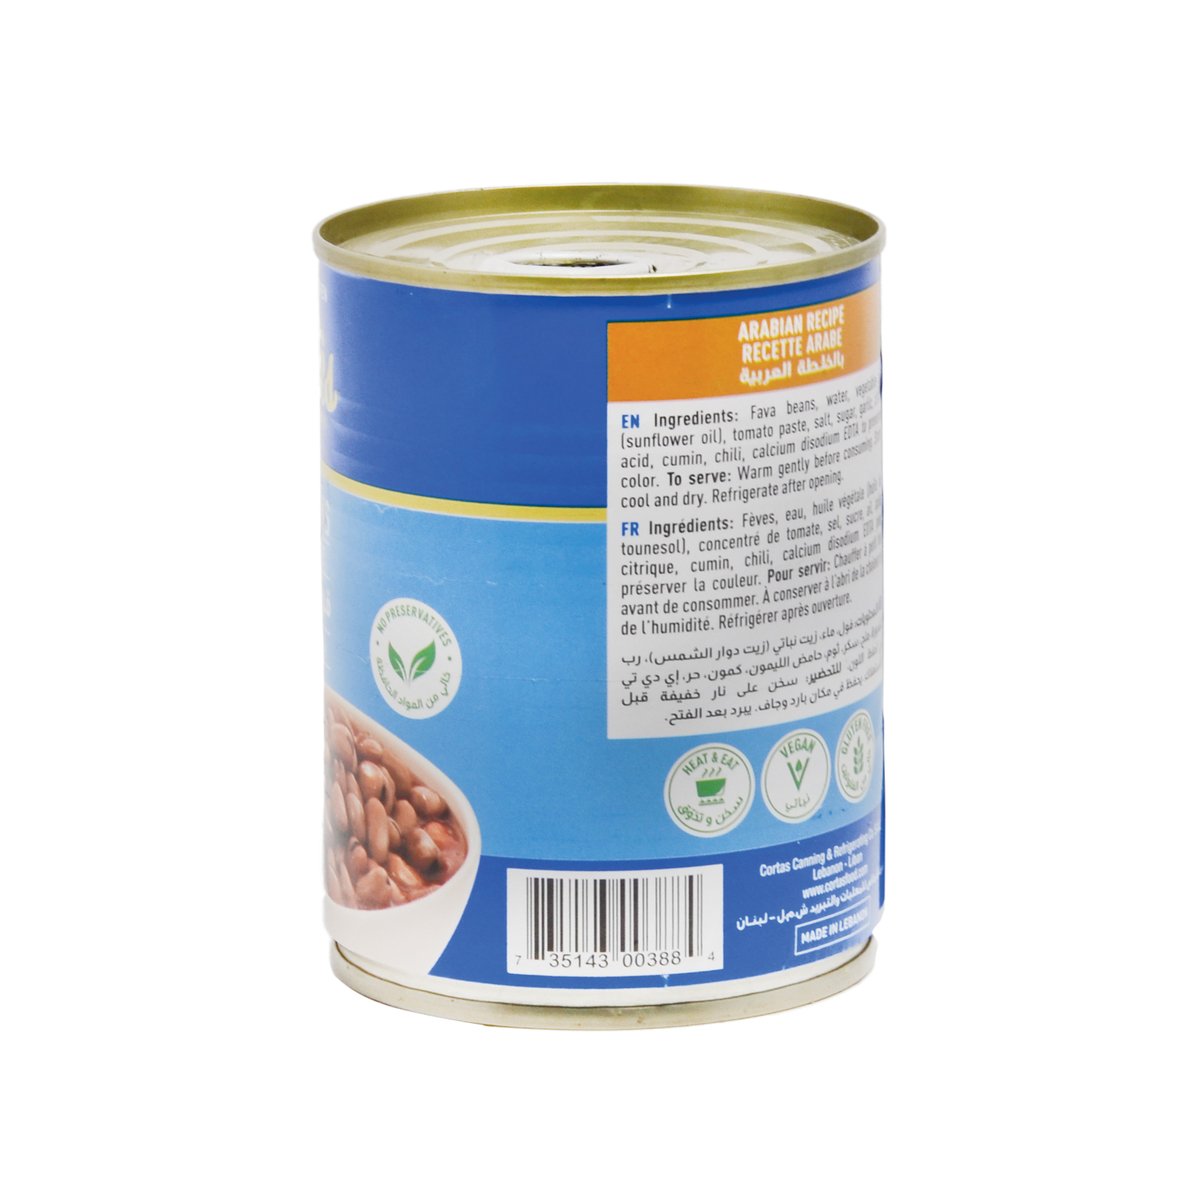 Cortas Fava Beans Arabian Recipe 400g